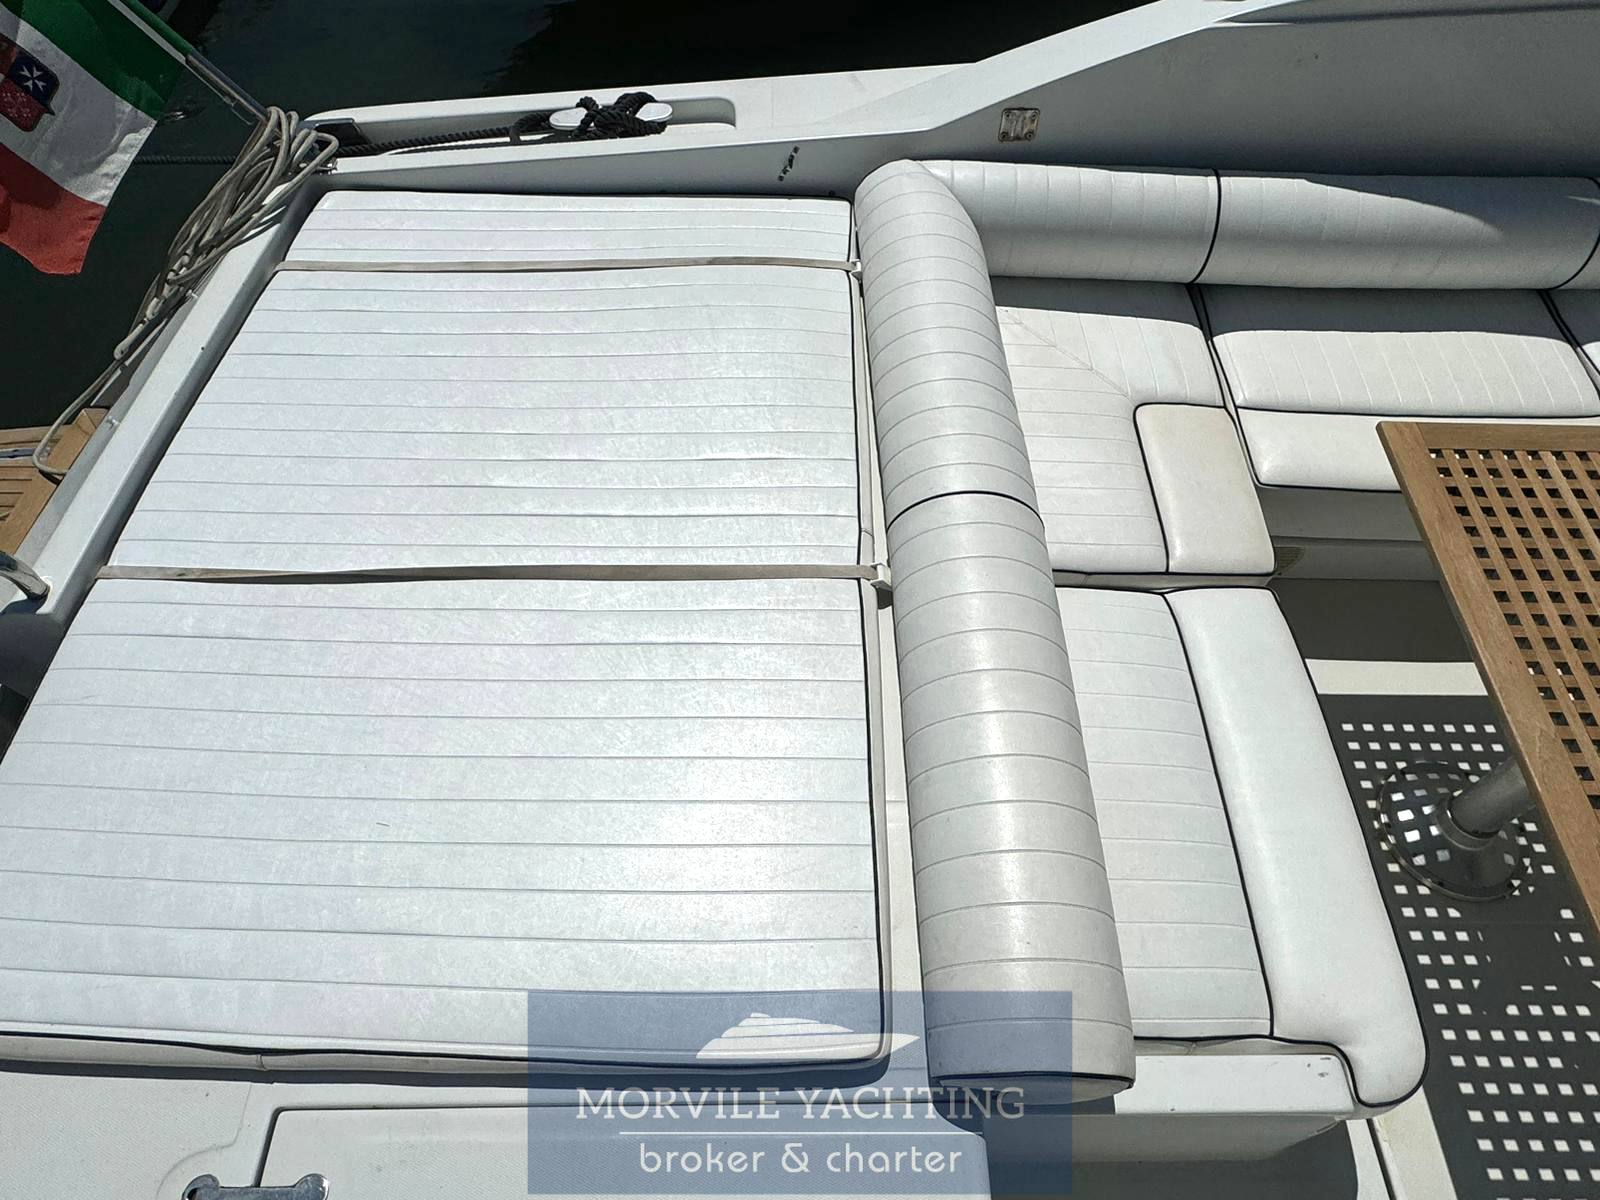 MOCHI CRAFT Mochi 45 open Barca a motore usata in vendita